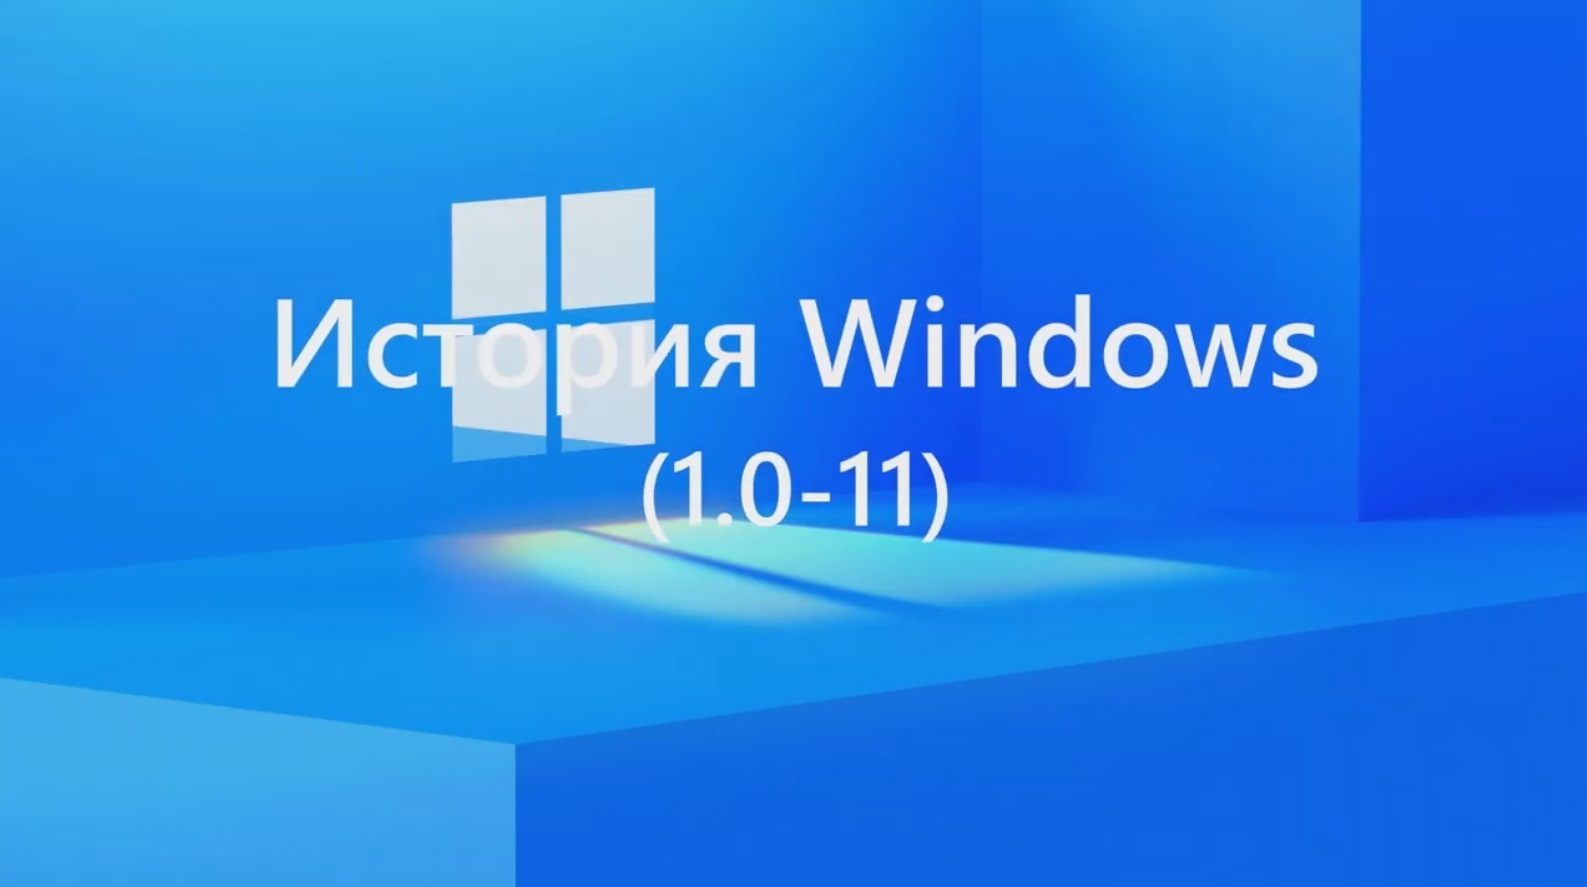 История Microsoft Windows от Windows 1.0 до Windows 11 (1985-2021)